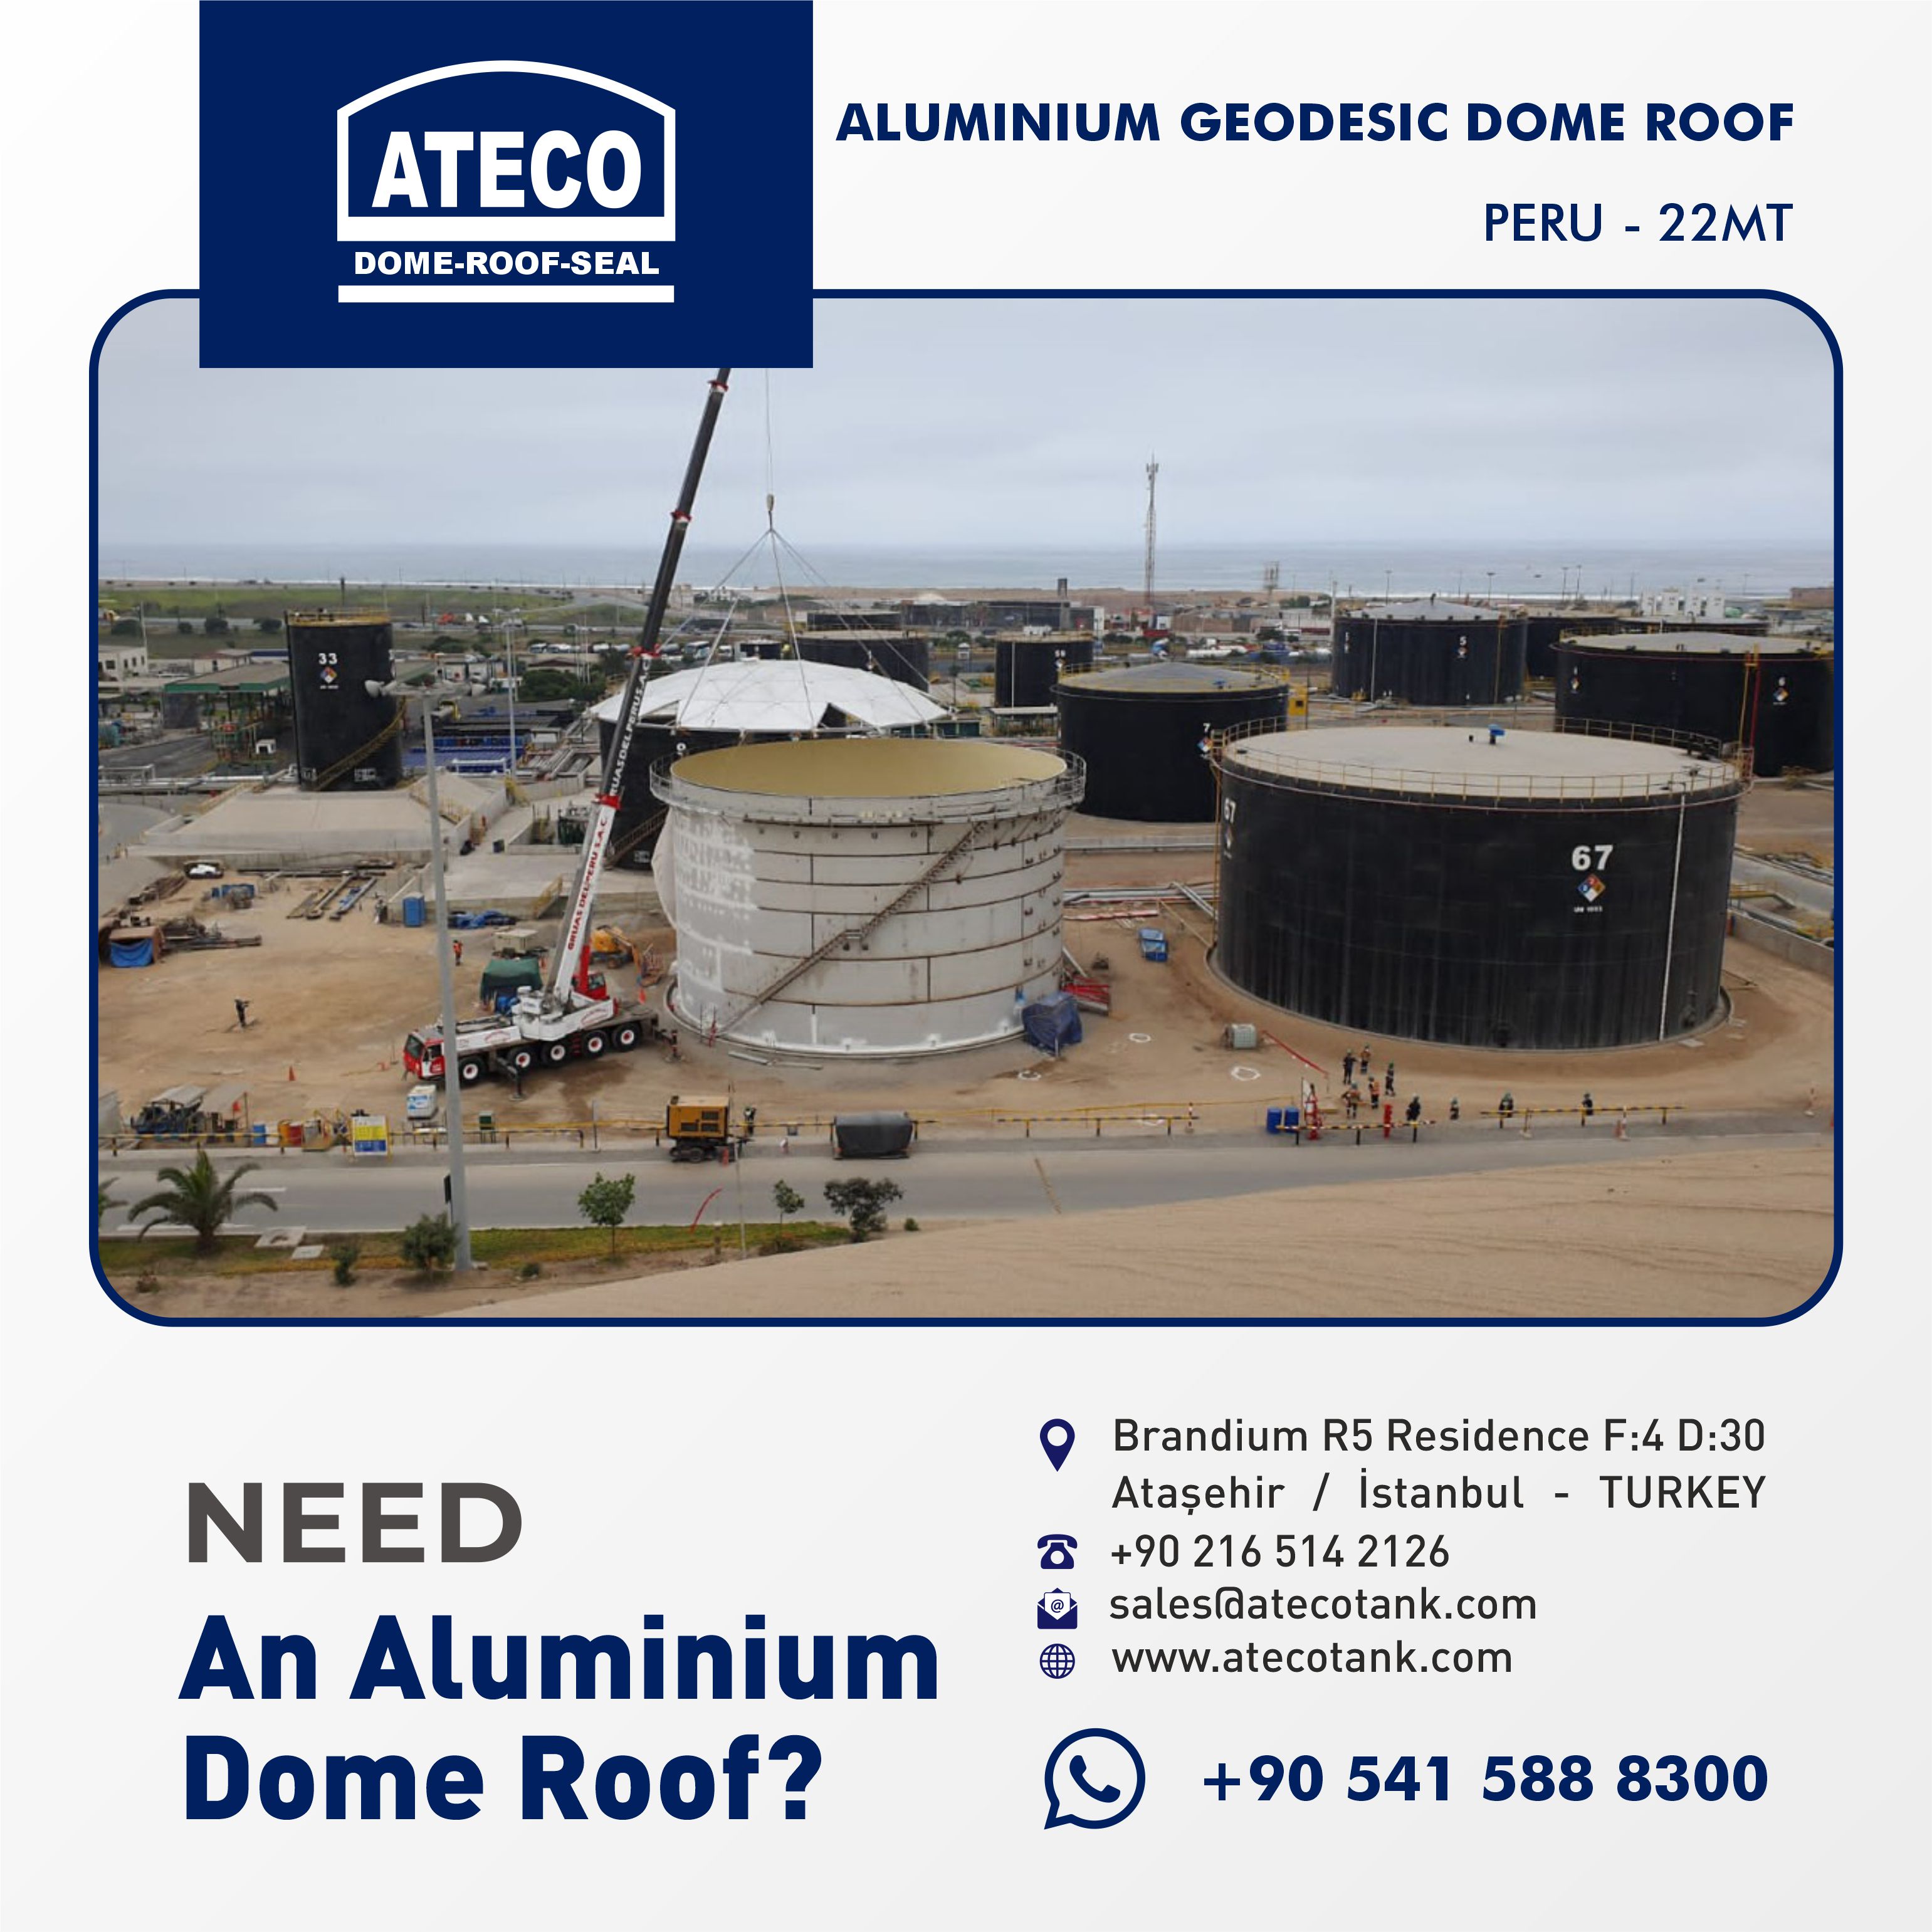 Ateco Tank on X: 22Mt Aluminium Geodesic Dome Roof - PERU https